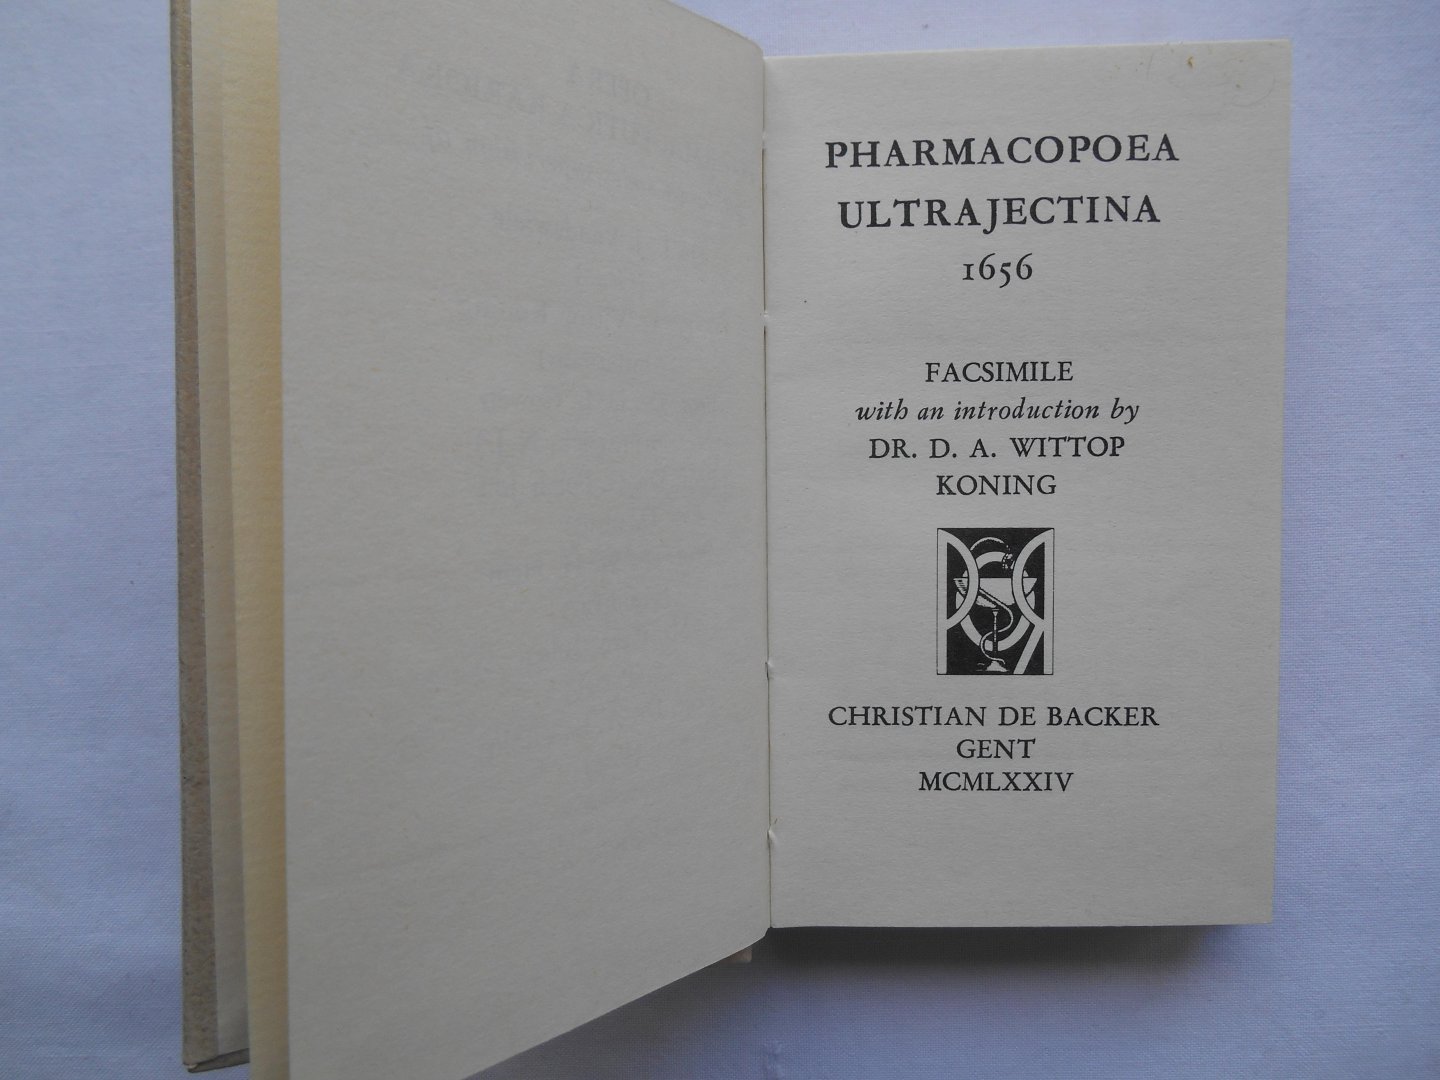 Dr. D.A. Wittop Koning (introduction) - Pharmacopoea Ultrajectina  (Utrecht) 1656 - facsimile